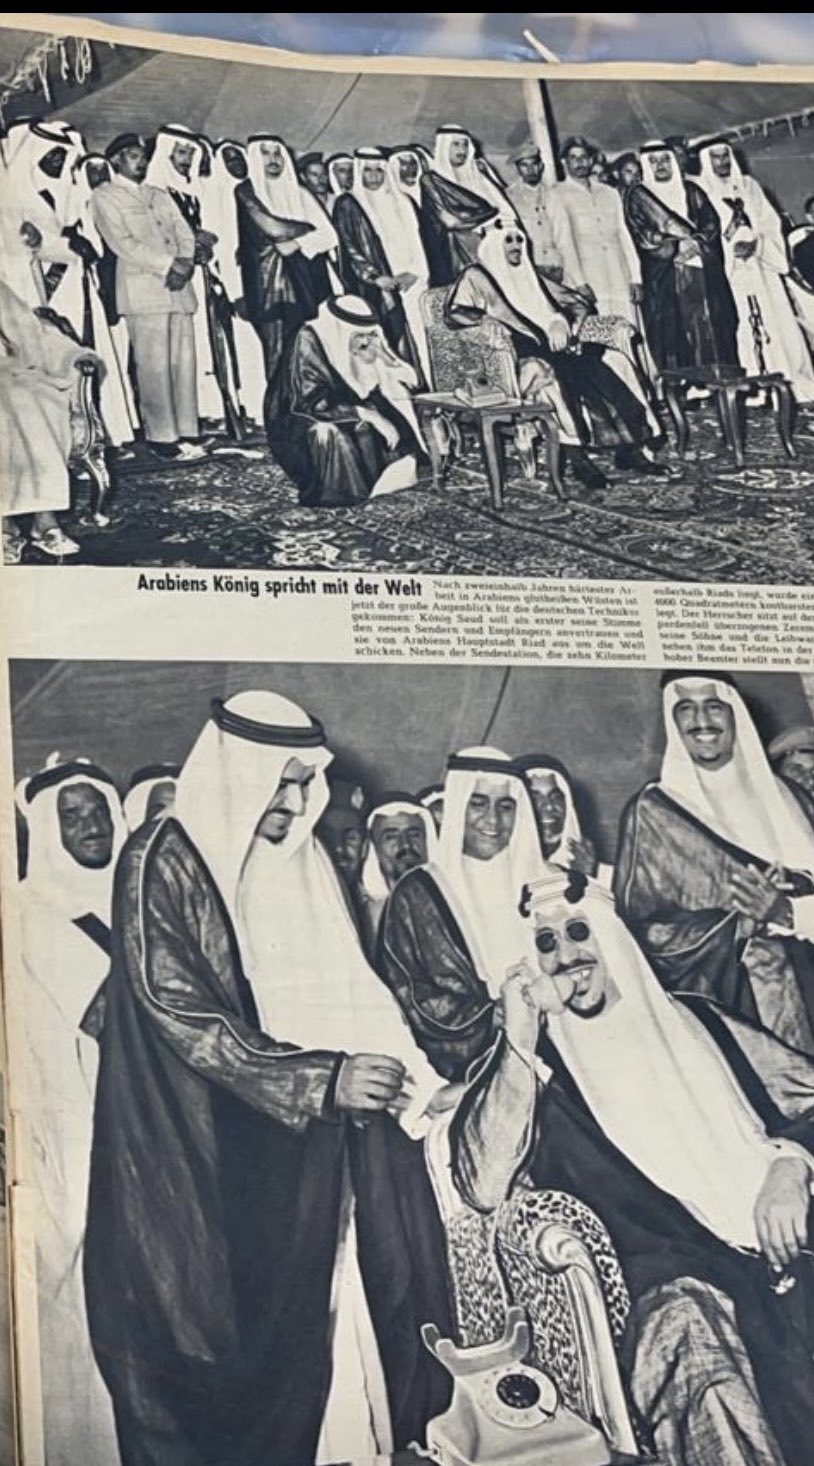 The inauguration of the radio line By King Saud and the Minister of Transport Prince Sultan bin Abdulaziz and Prince Riyadh King Salman and Prince Saad bin Saud